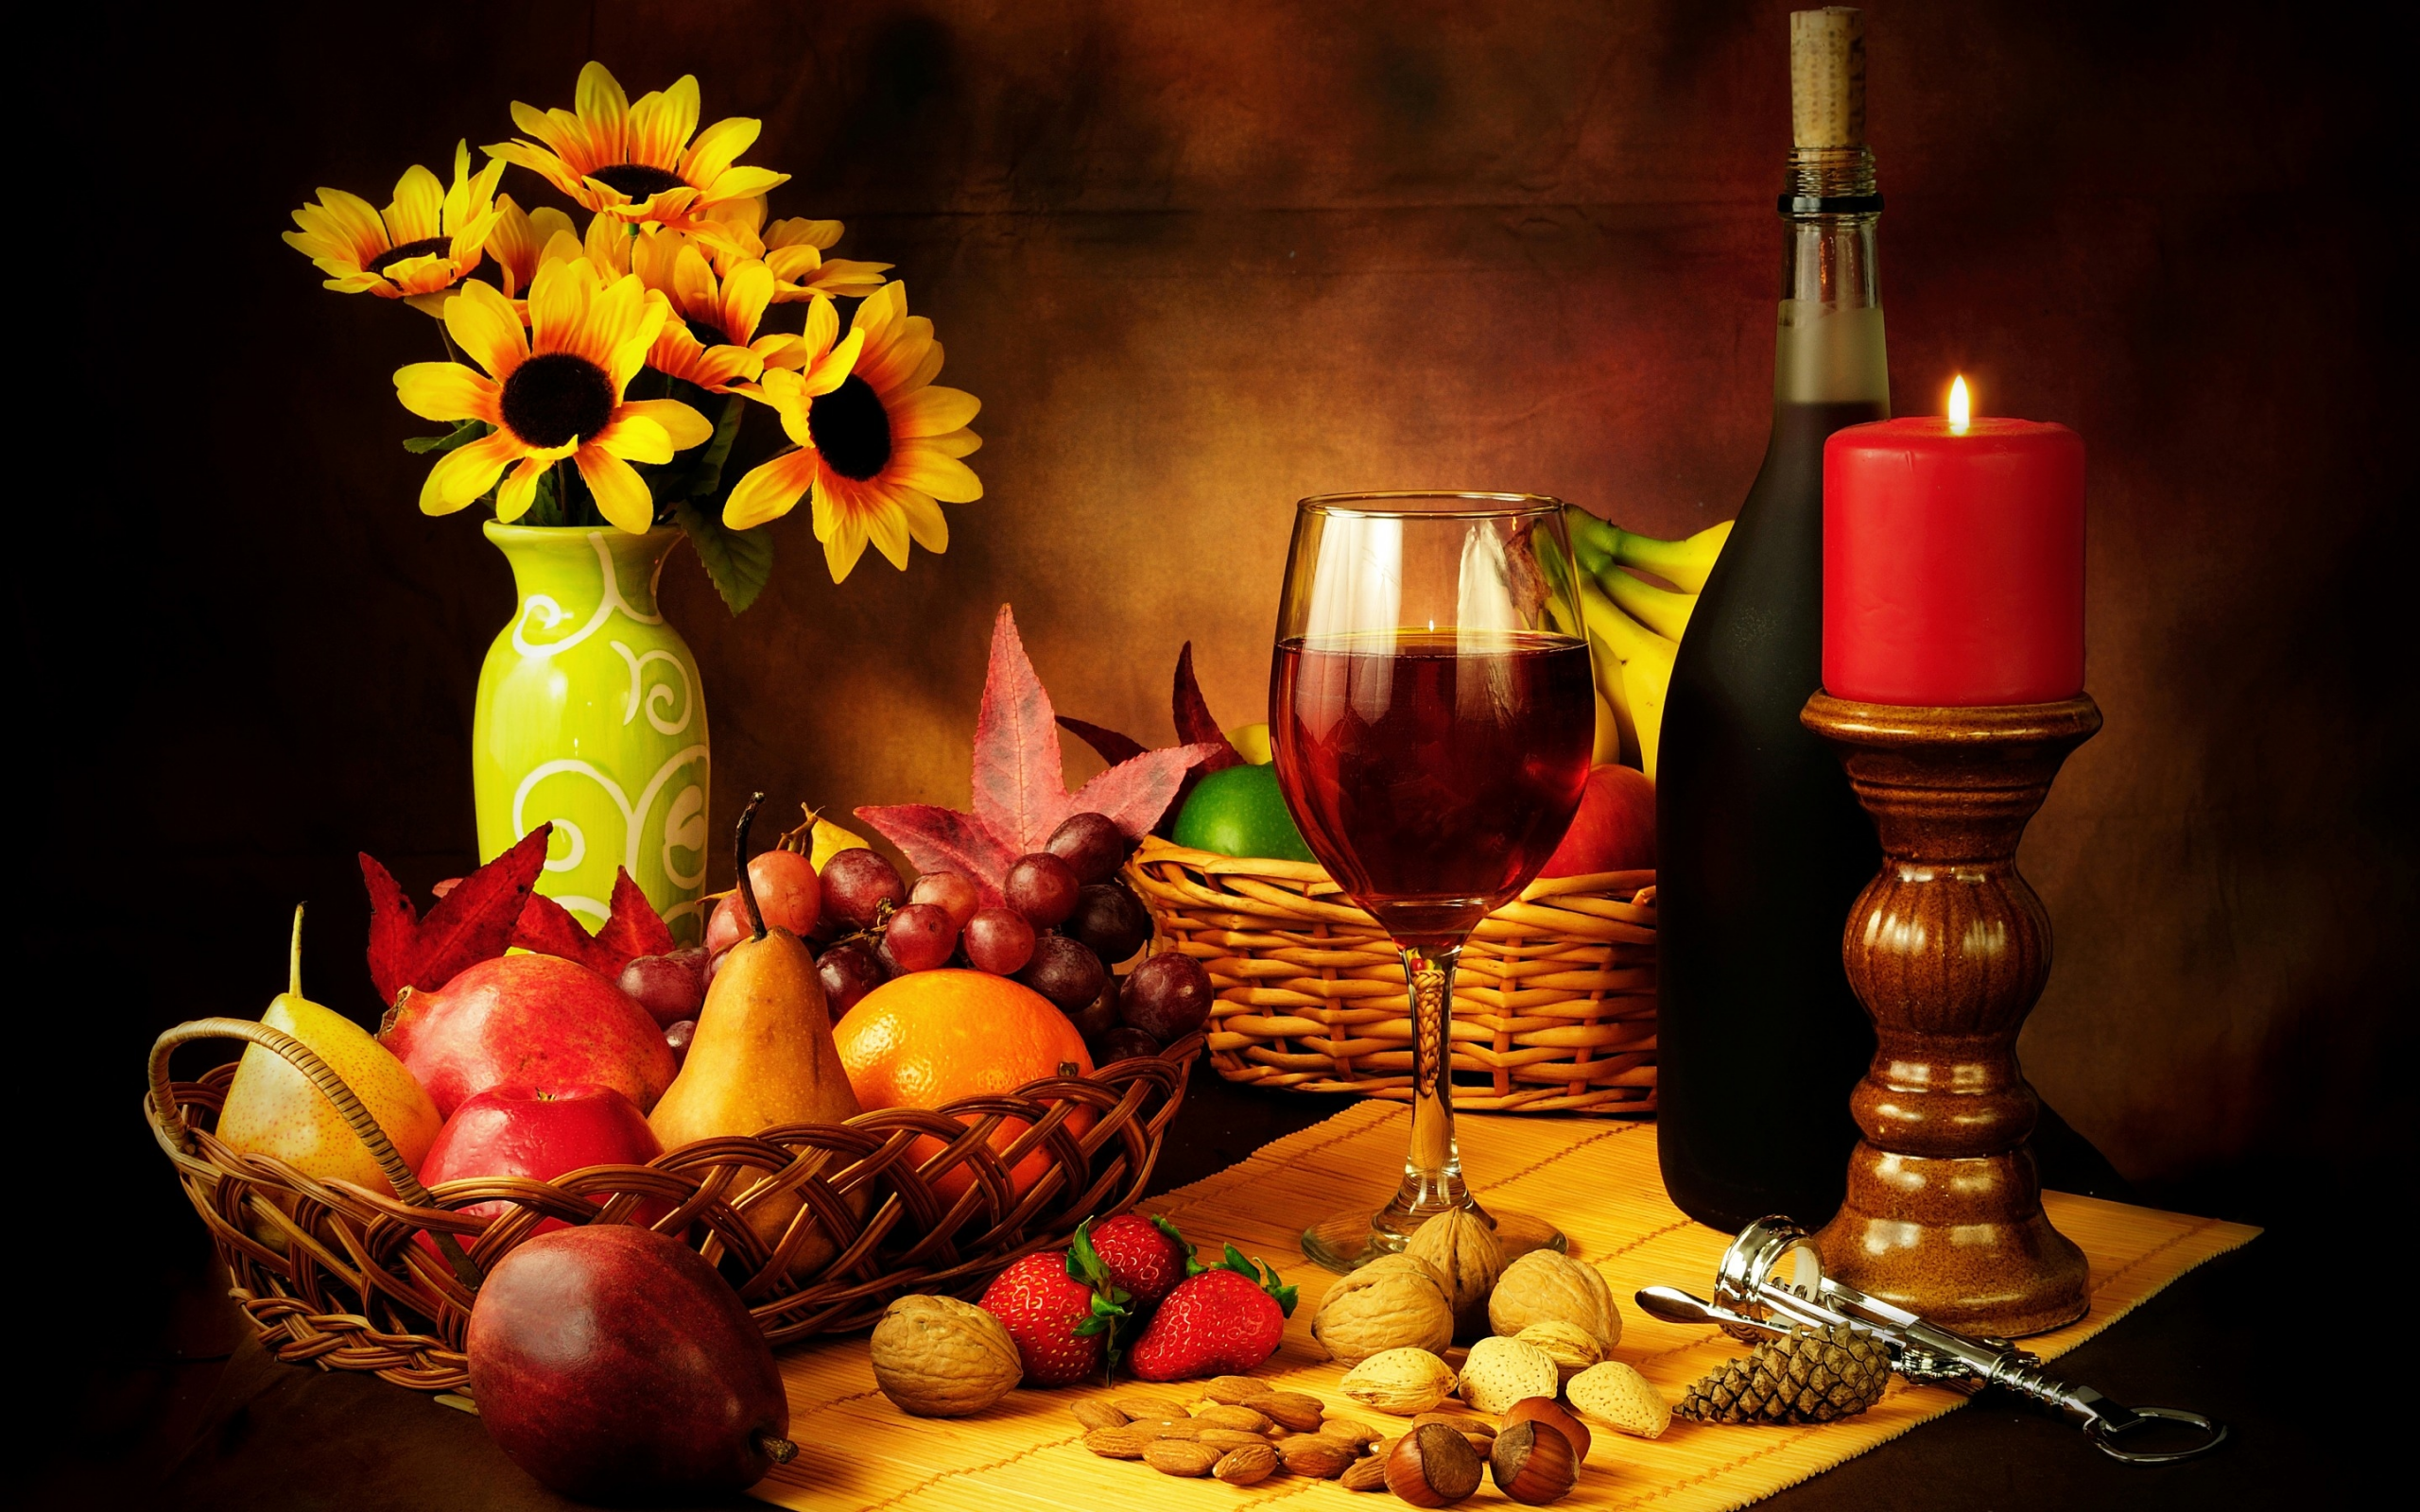 wine, flowers, fruit, candle, nuts, вино, фрукты, клубника, бананы, виноград, свеча, цветы, орехи, натюрморт